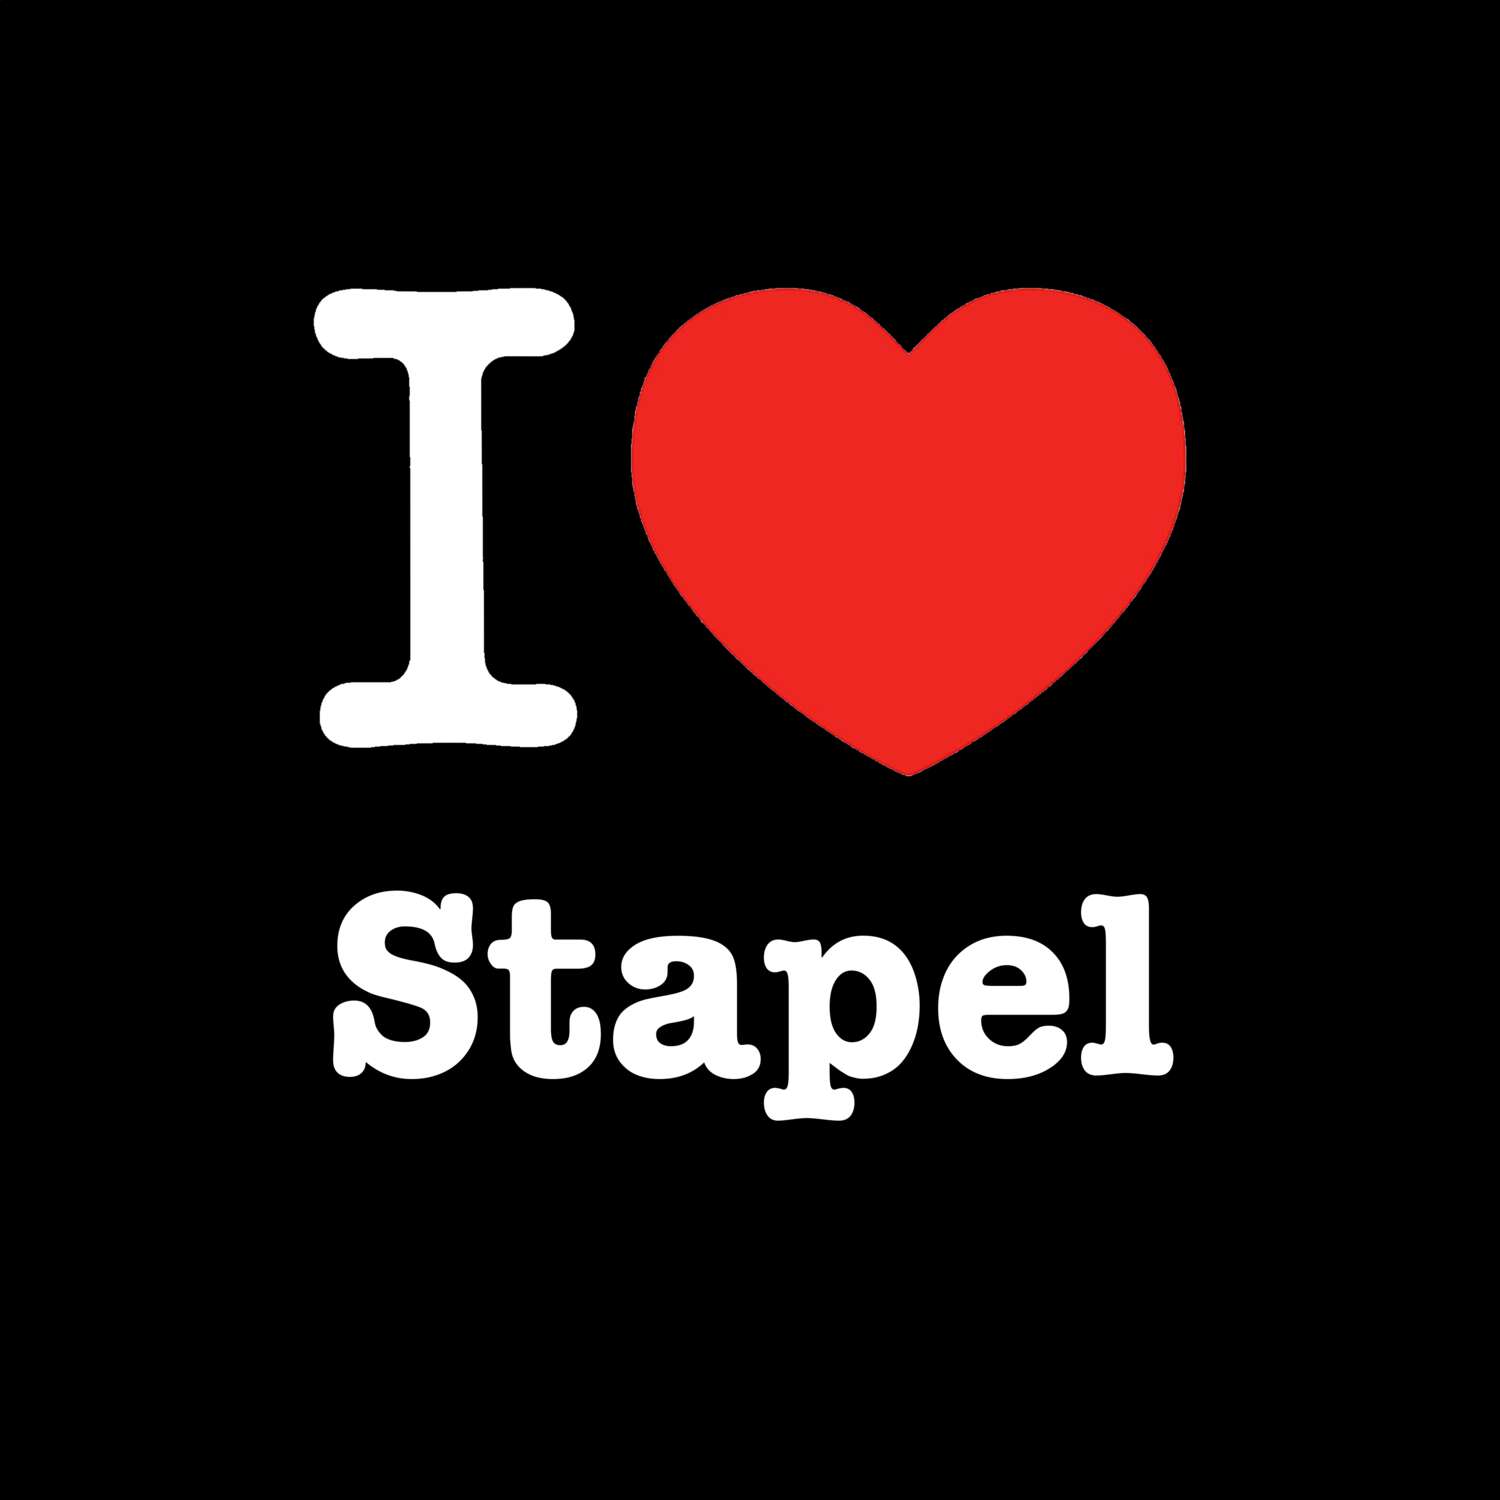 Stapel T-Shirt »I love«